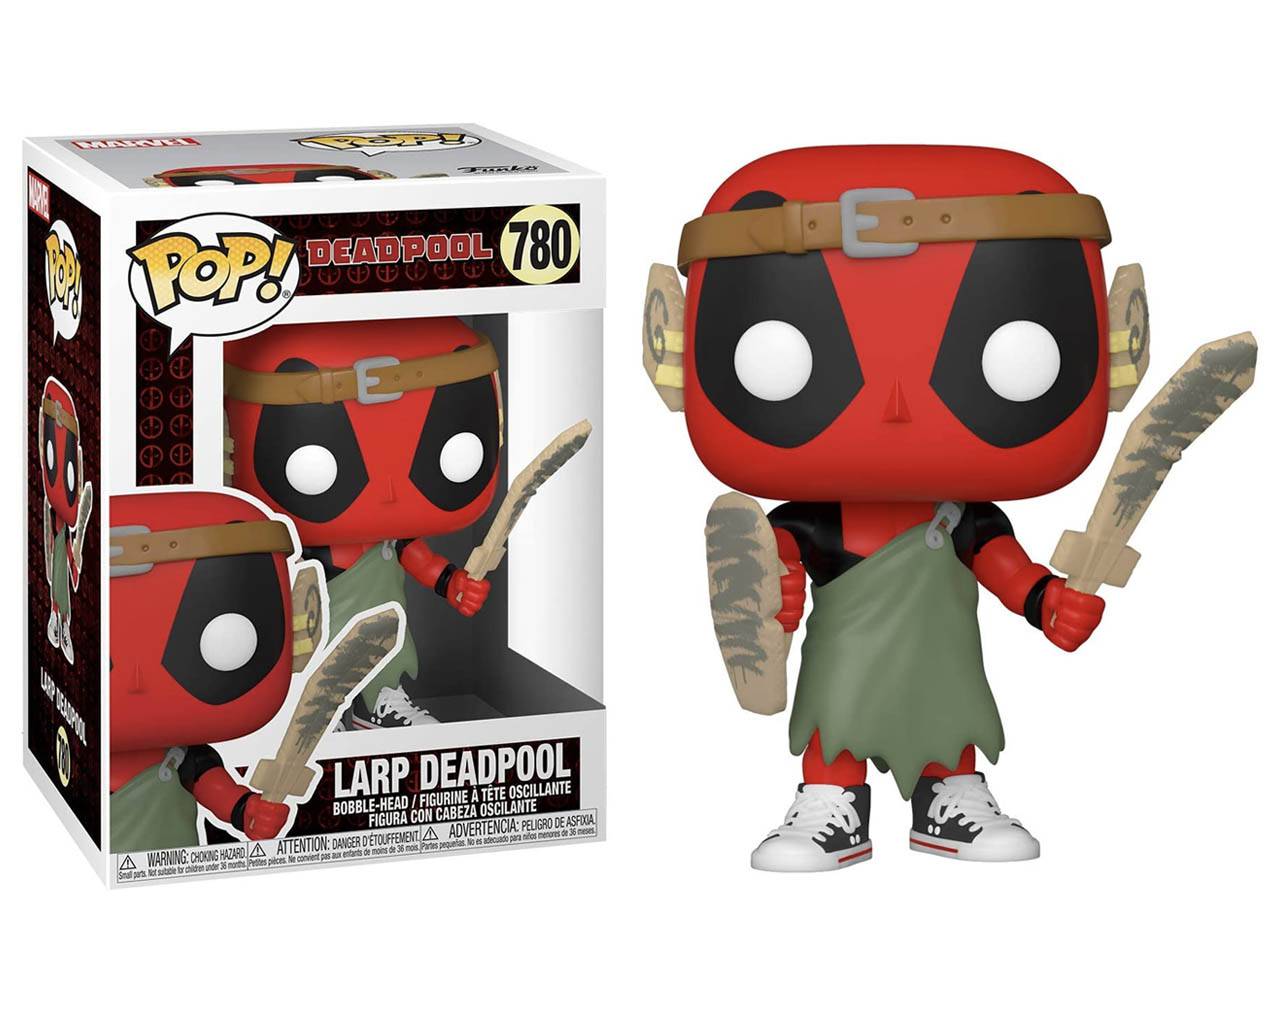 Larp Deadpool (30th Anniversary) Pop! Vinyl